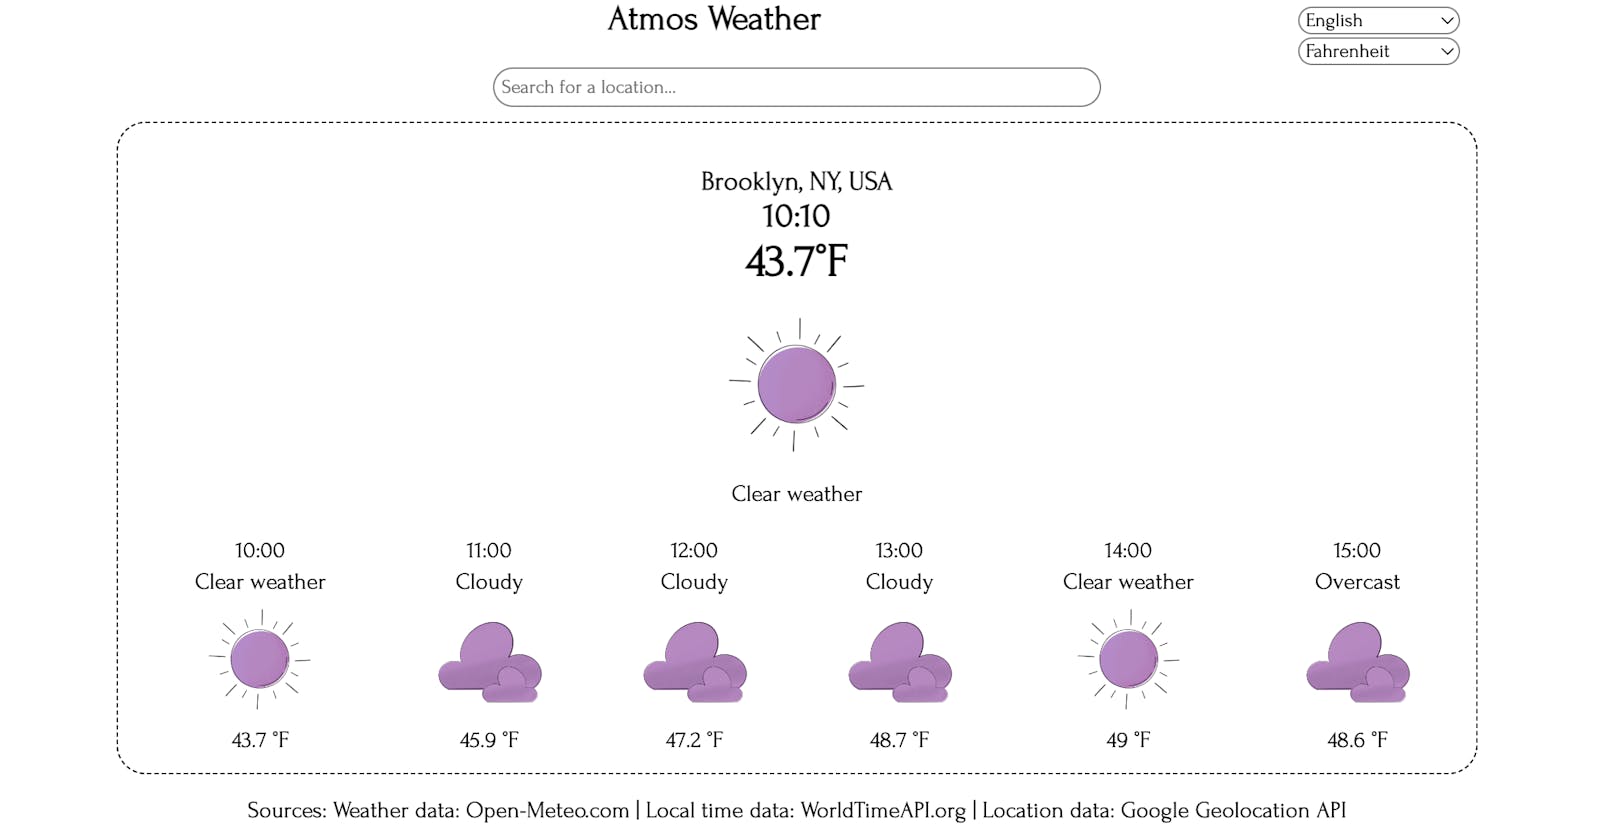 Flatiron School Phase 1 project: "Atmos Weather"